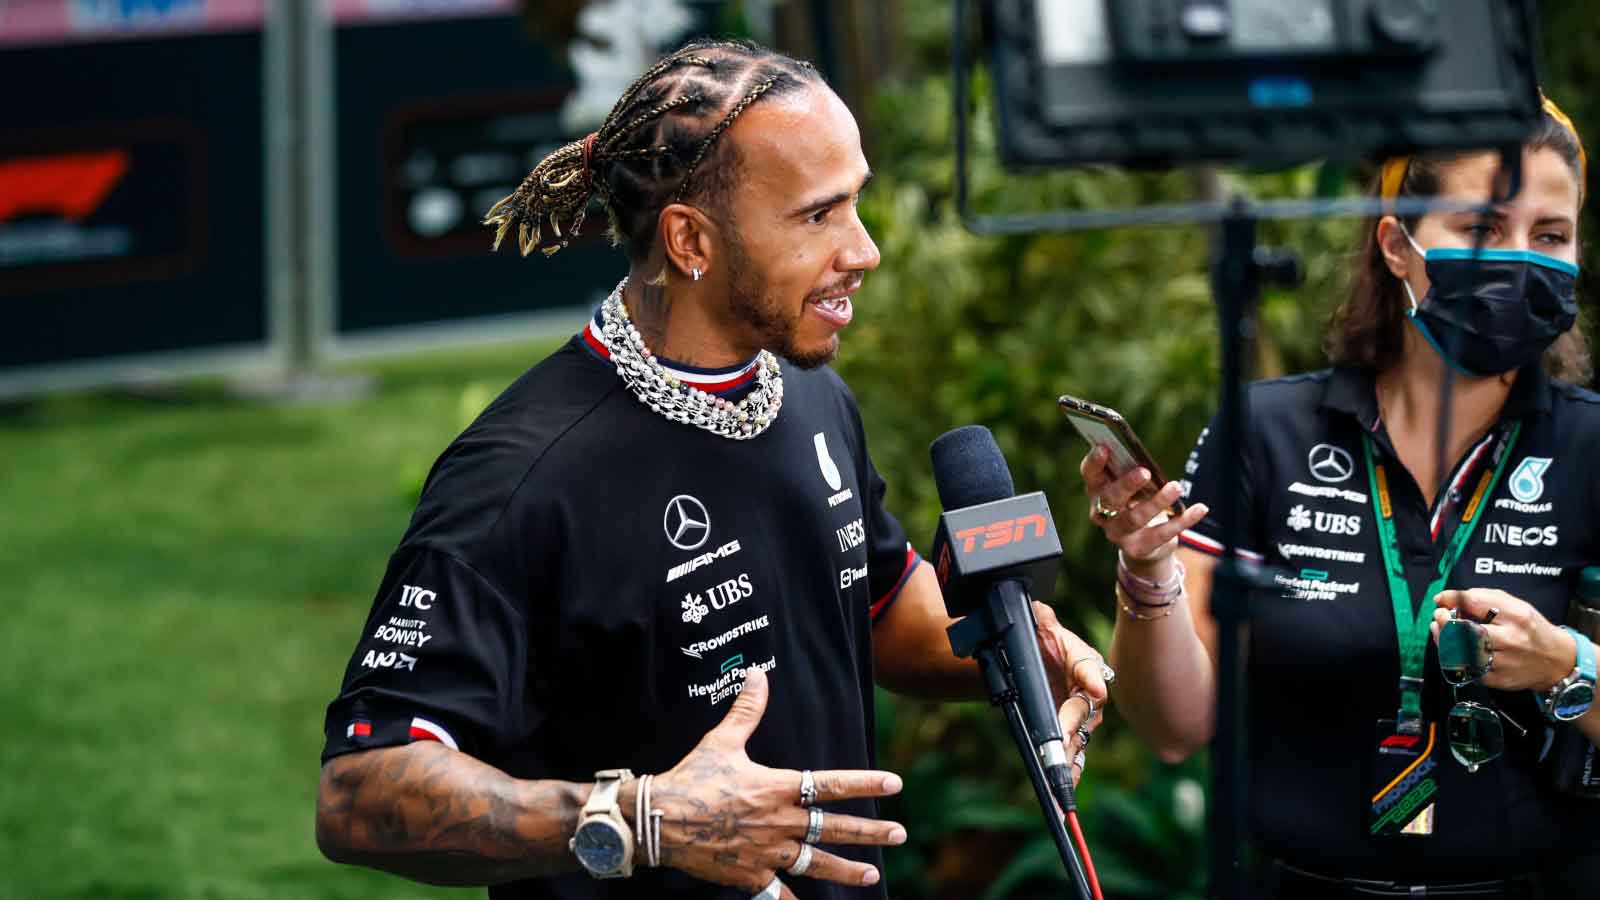 Lewis Hamilton during the media rounds. Miami May 2022.